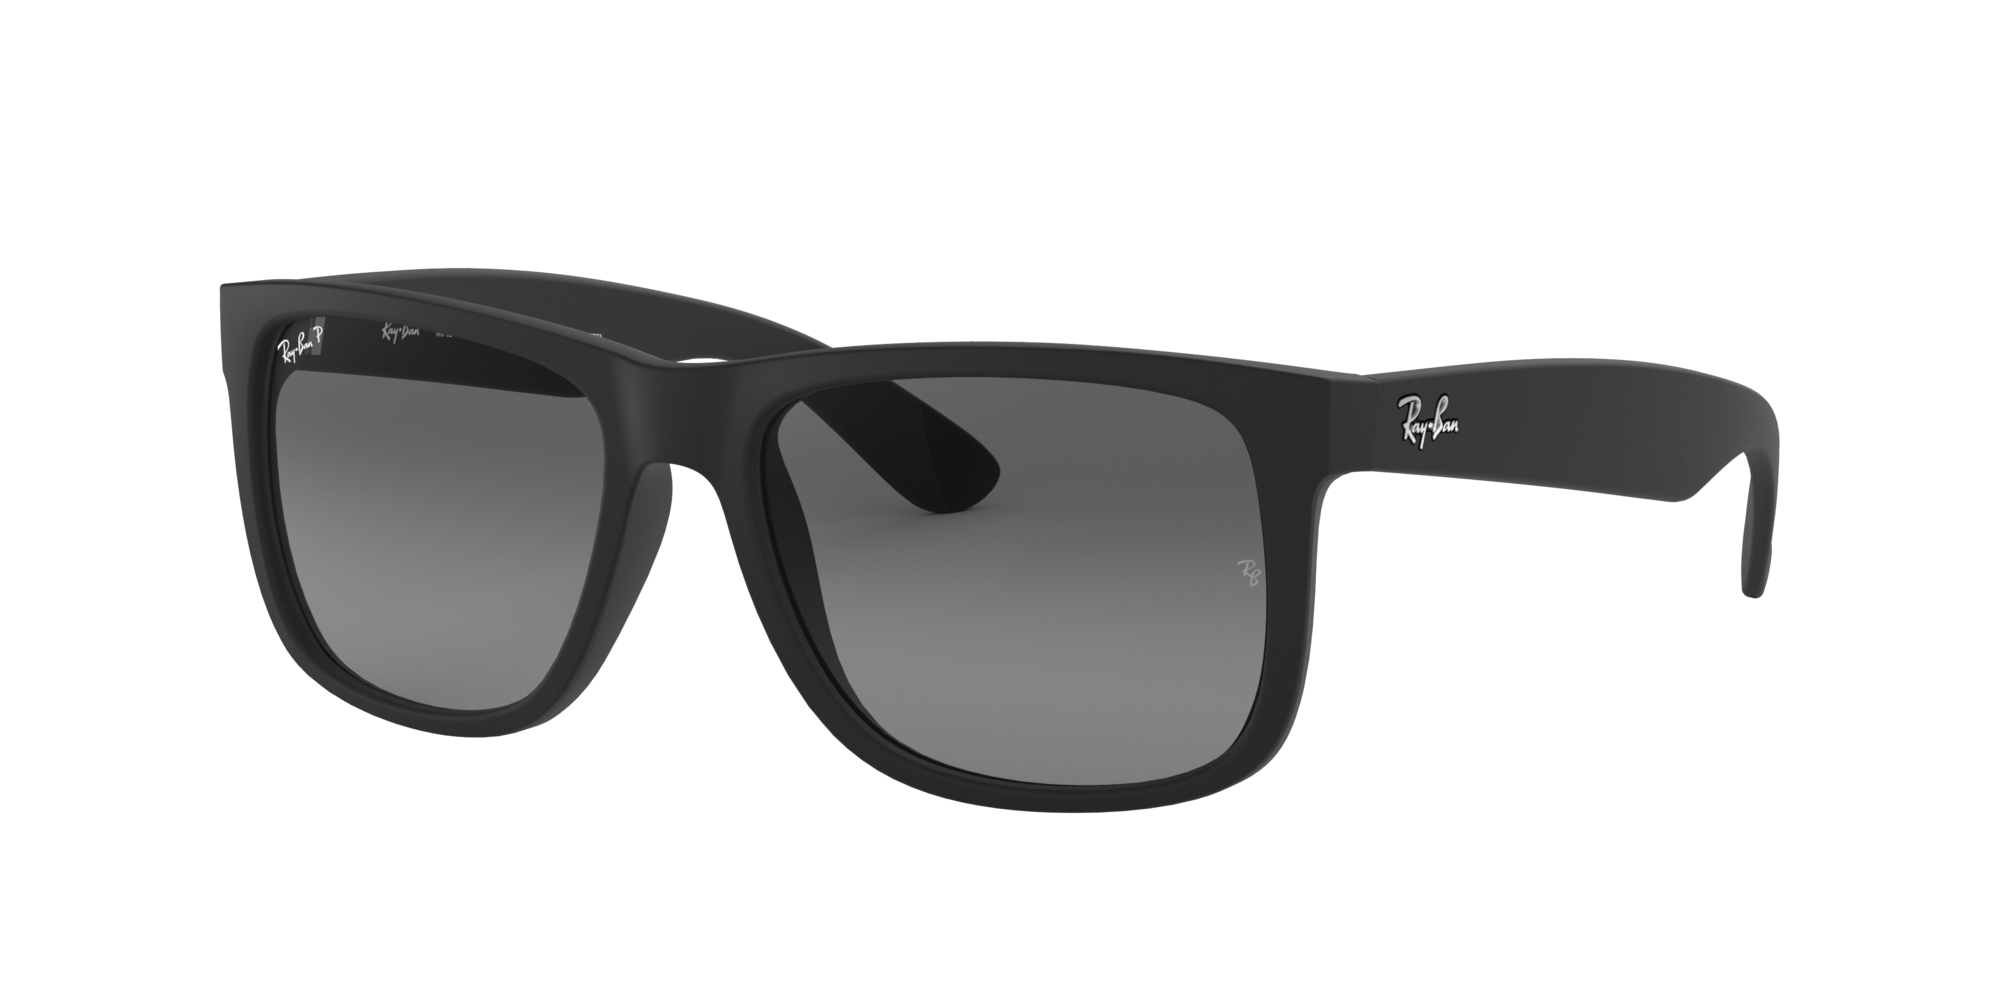 ray ban p sunglasses price in india